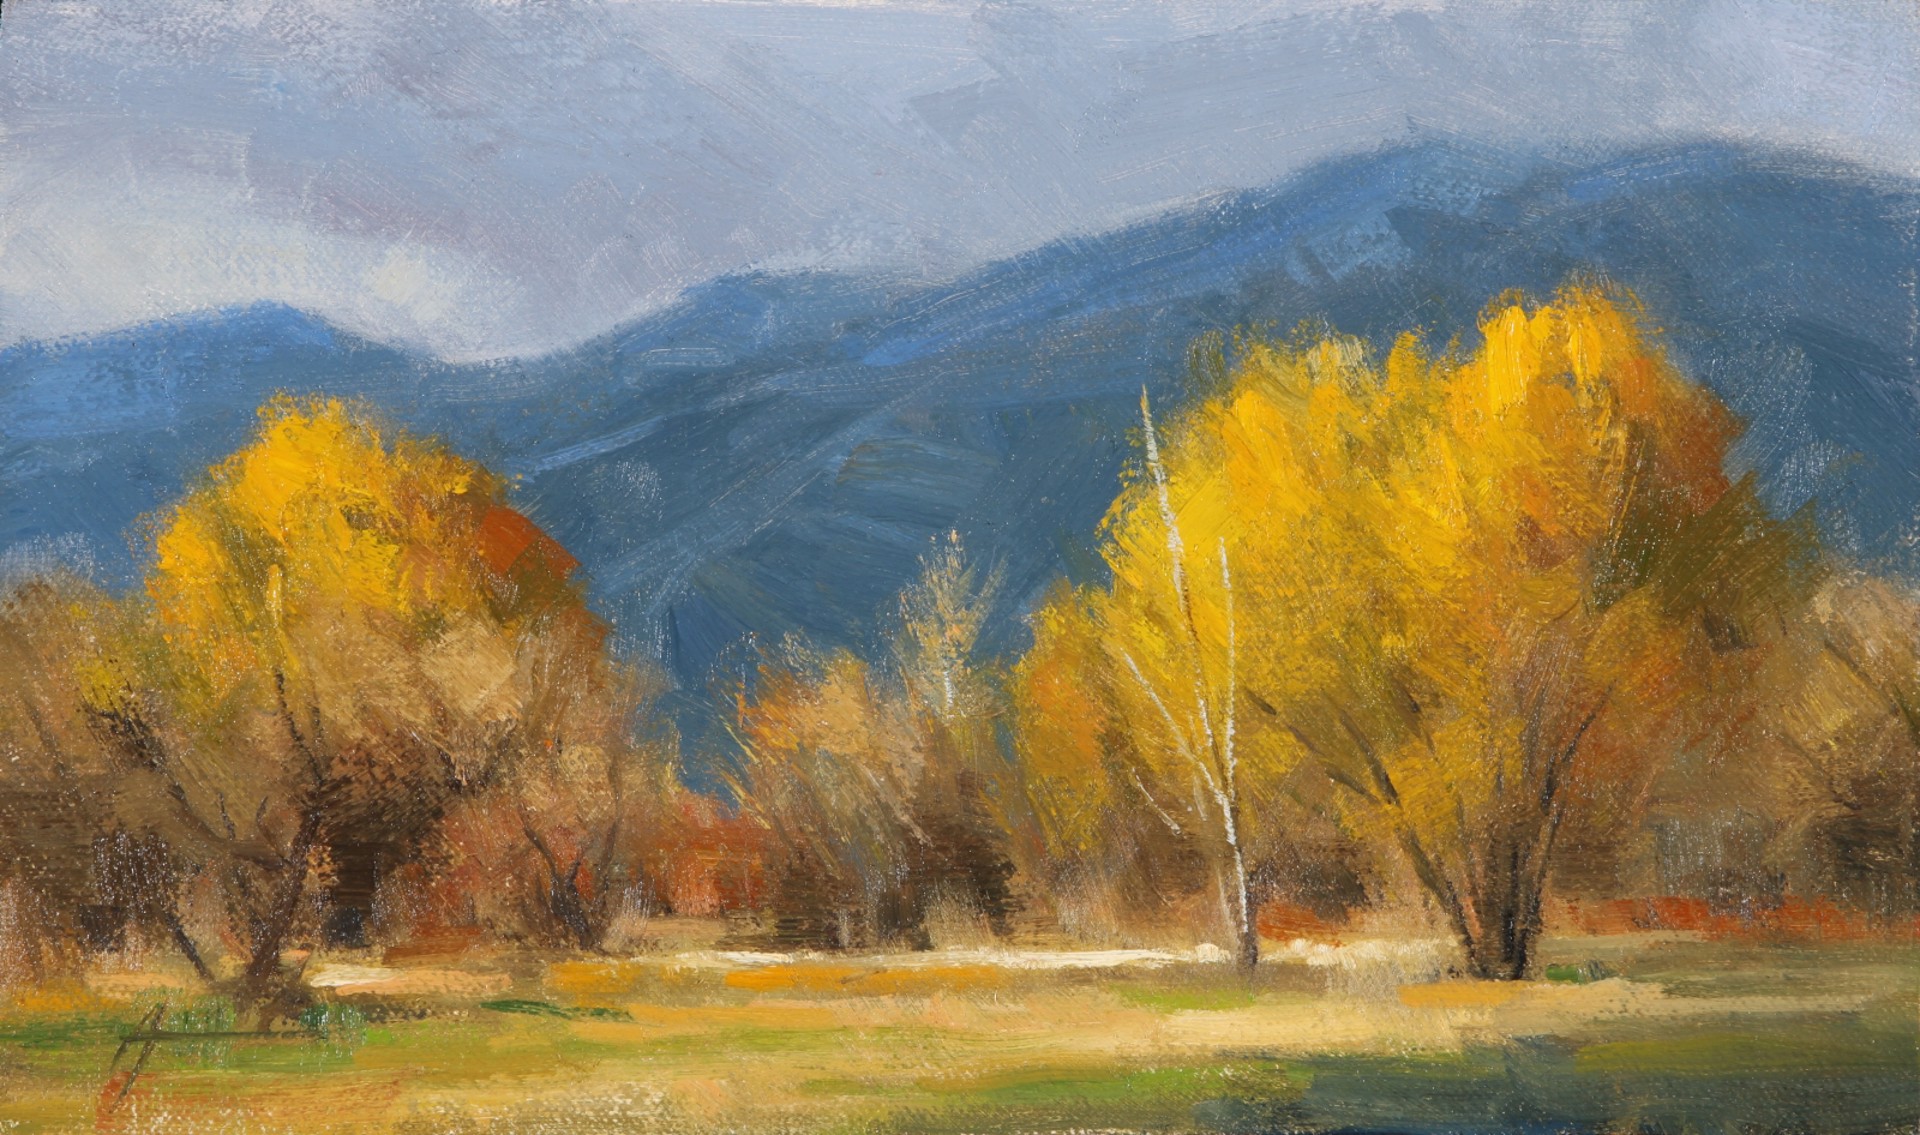 Near Taos by Ed Aldrich